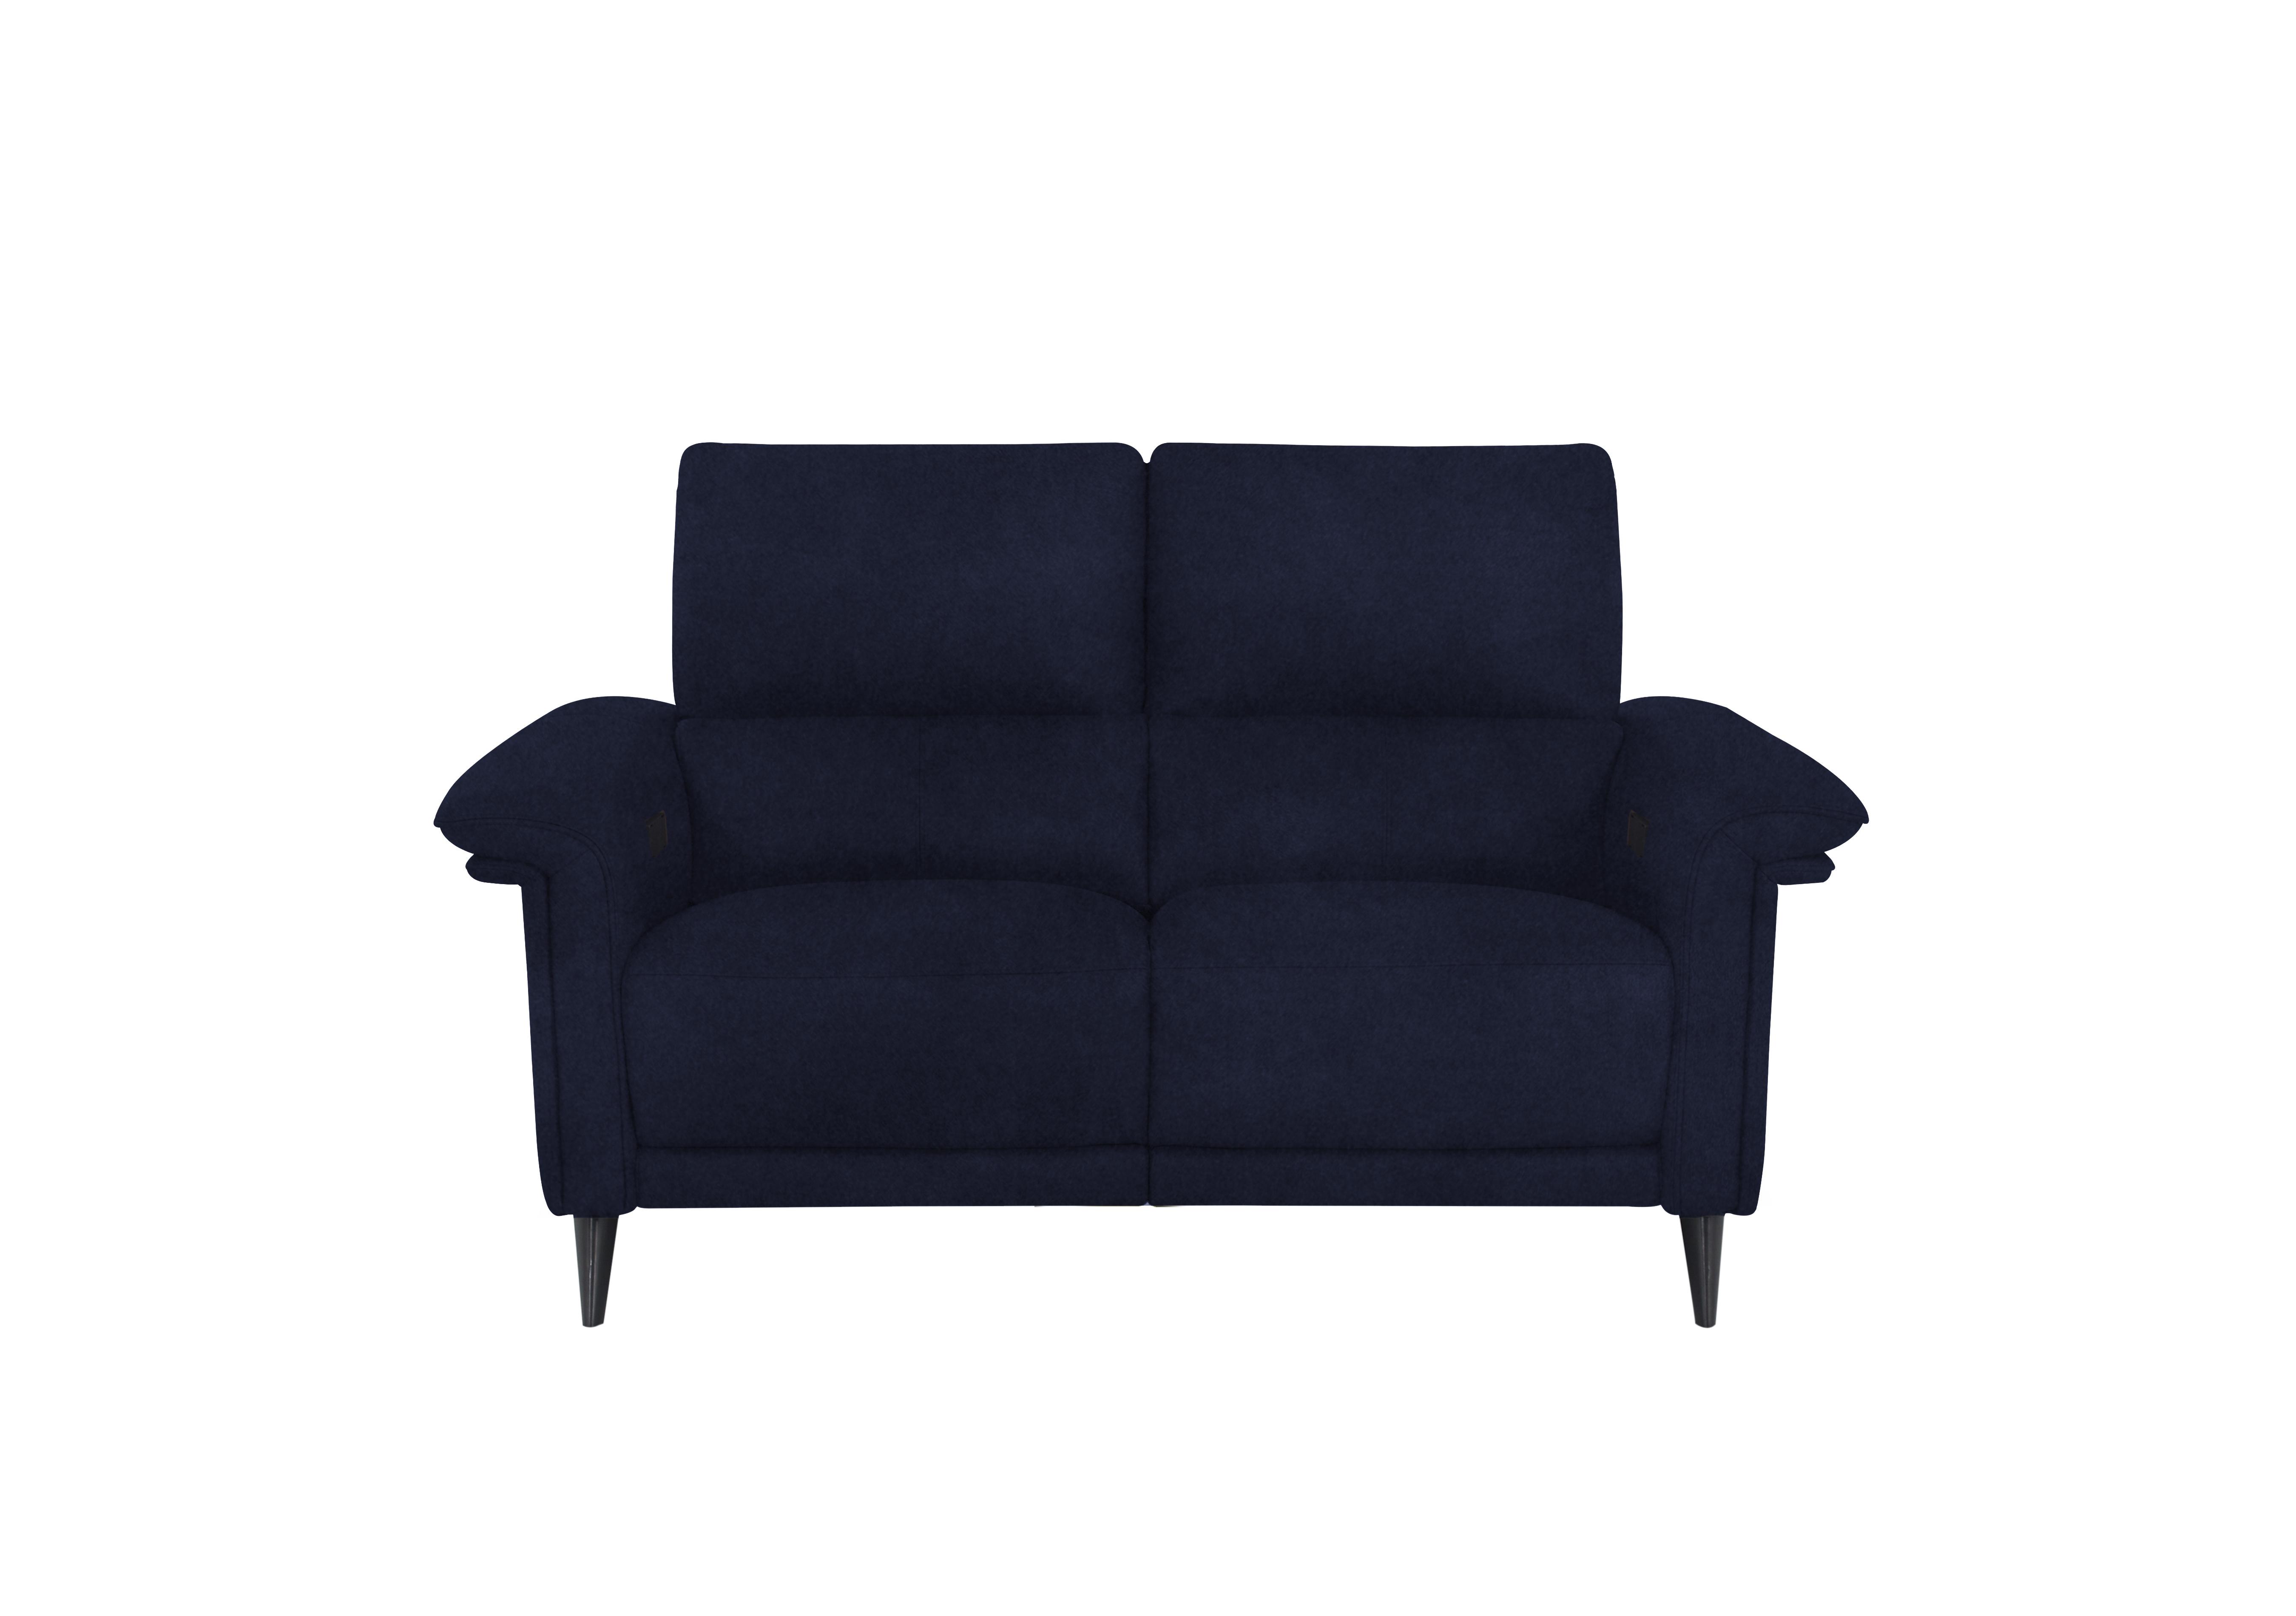 Huxley 2 Seater Fabric Sofa in Fab-Meg-R28 Navy on Furniture Village